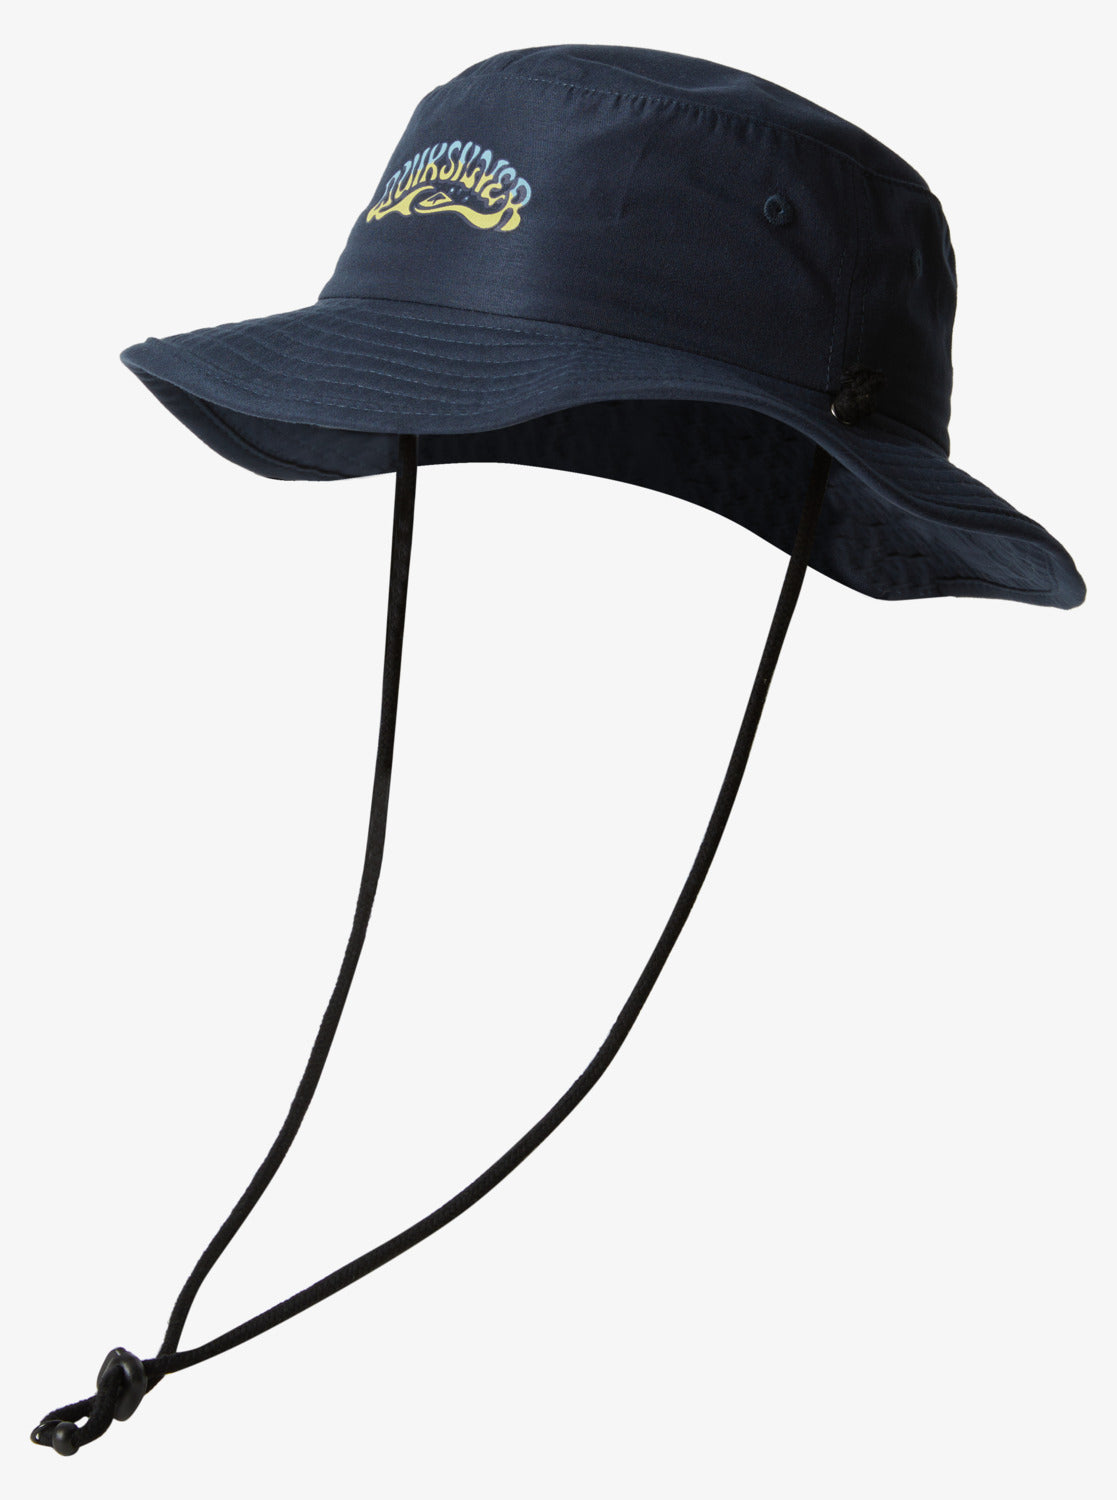 Quiksilver Boys' Tower 51 Safari Boonie Hat, Blue